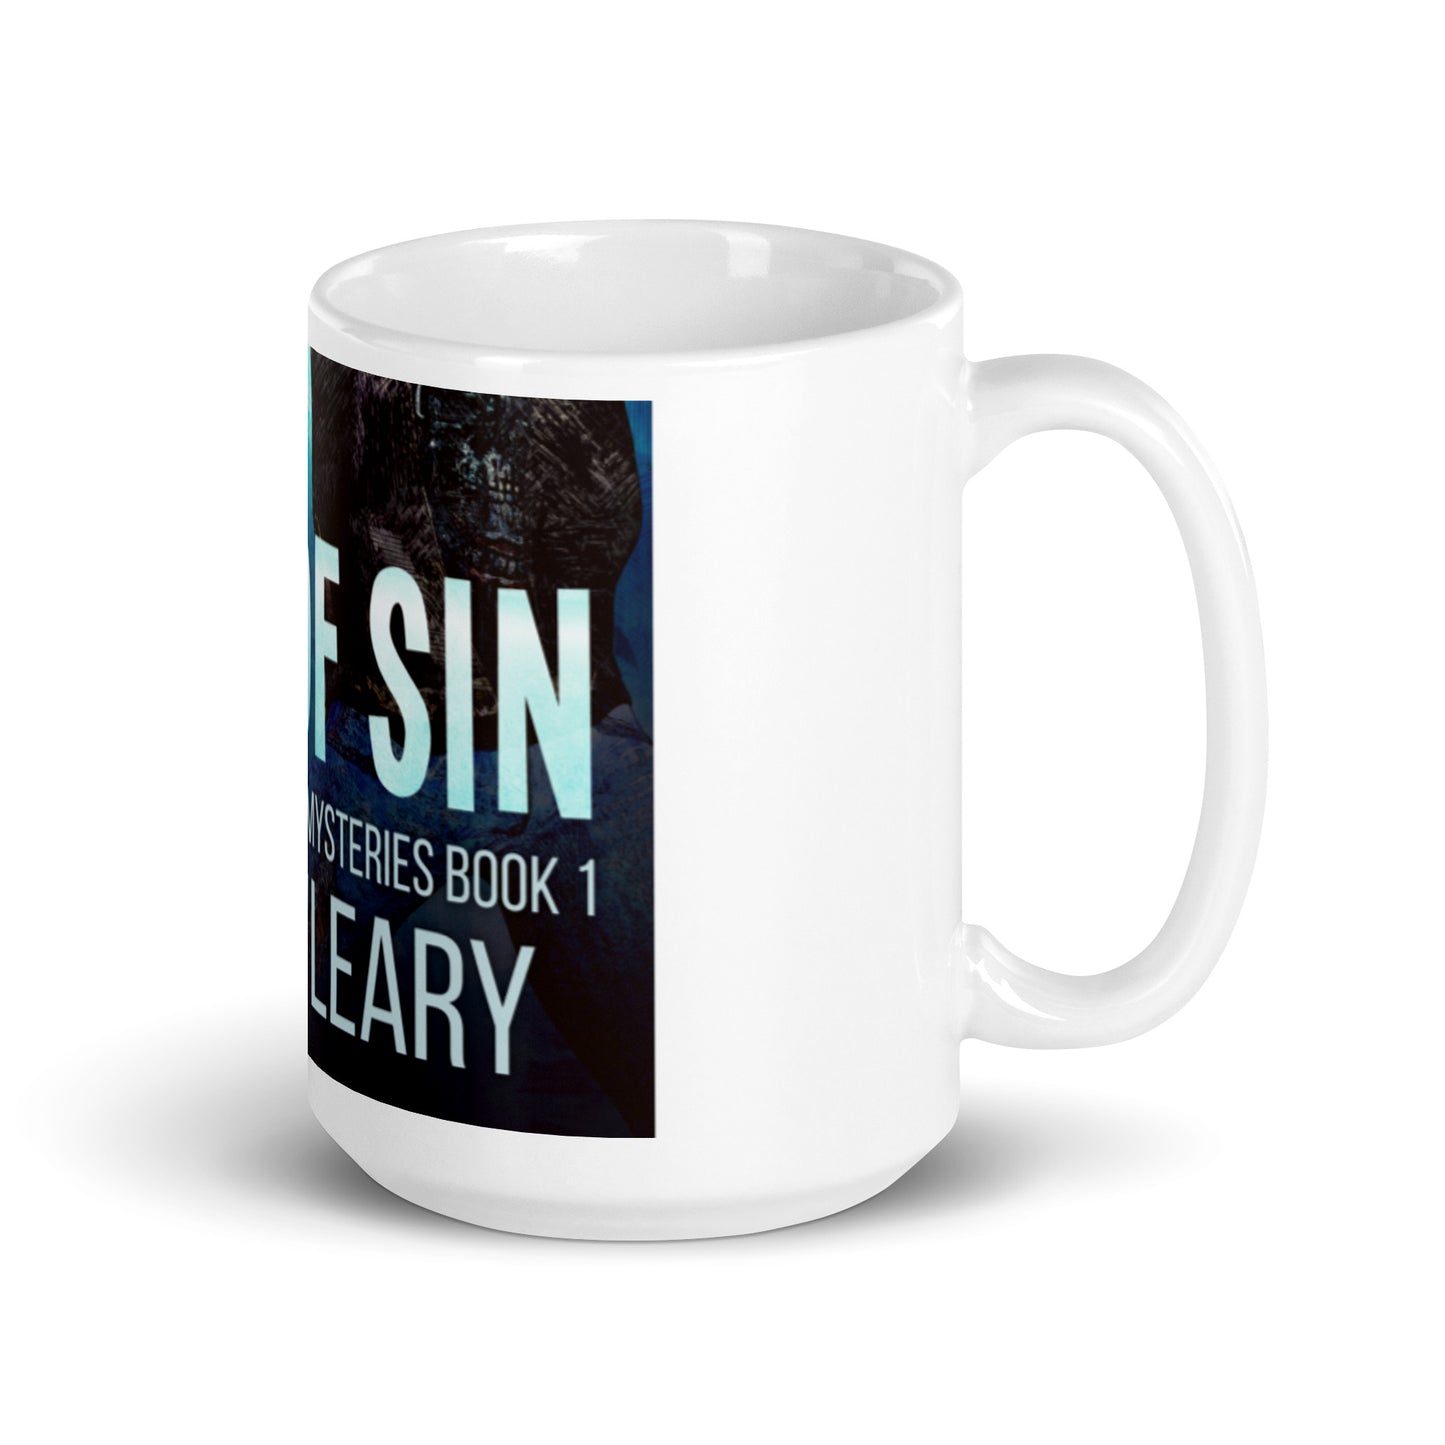 City Of Sin - White Coffee Mug